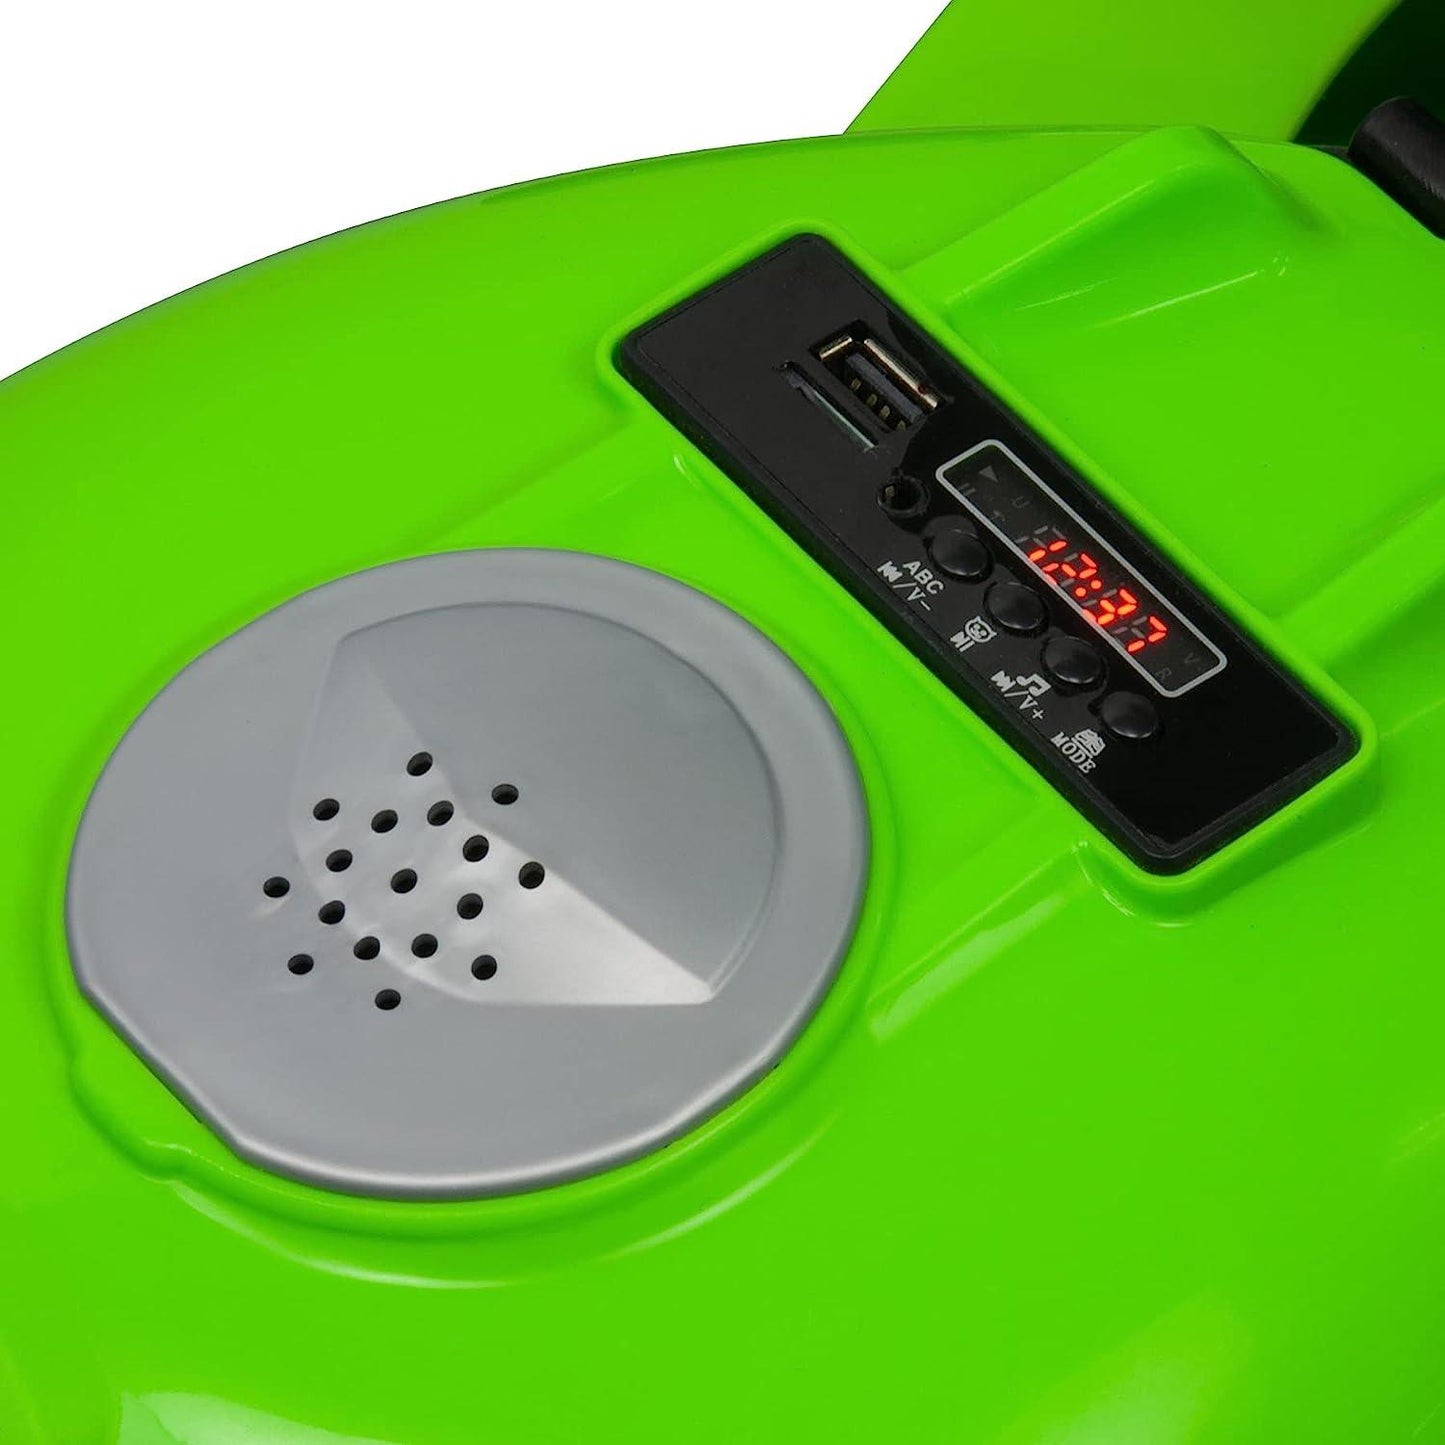 PATOYS | Injusa | Licensed MOTO ZX10 Ninja Kawasaki Battery Operated 12 volt dirt Bike for Kids (Green) - PATOYS